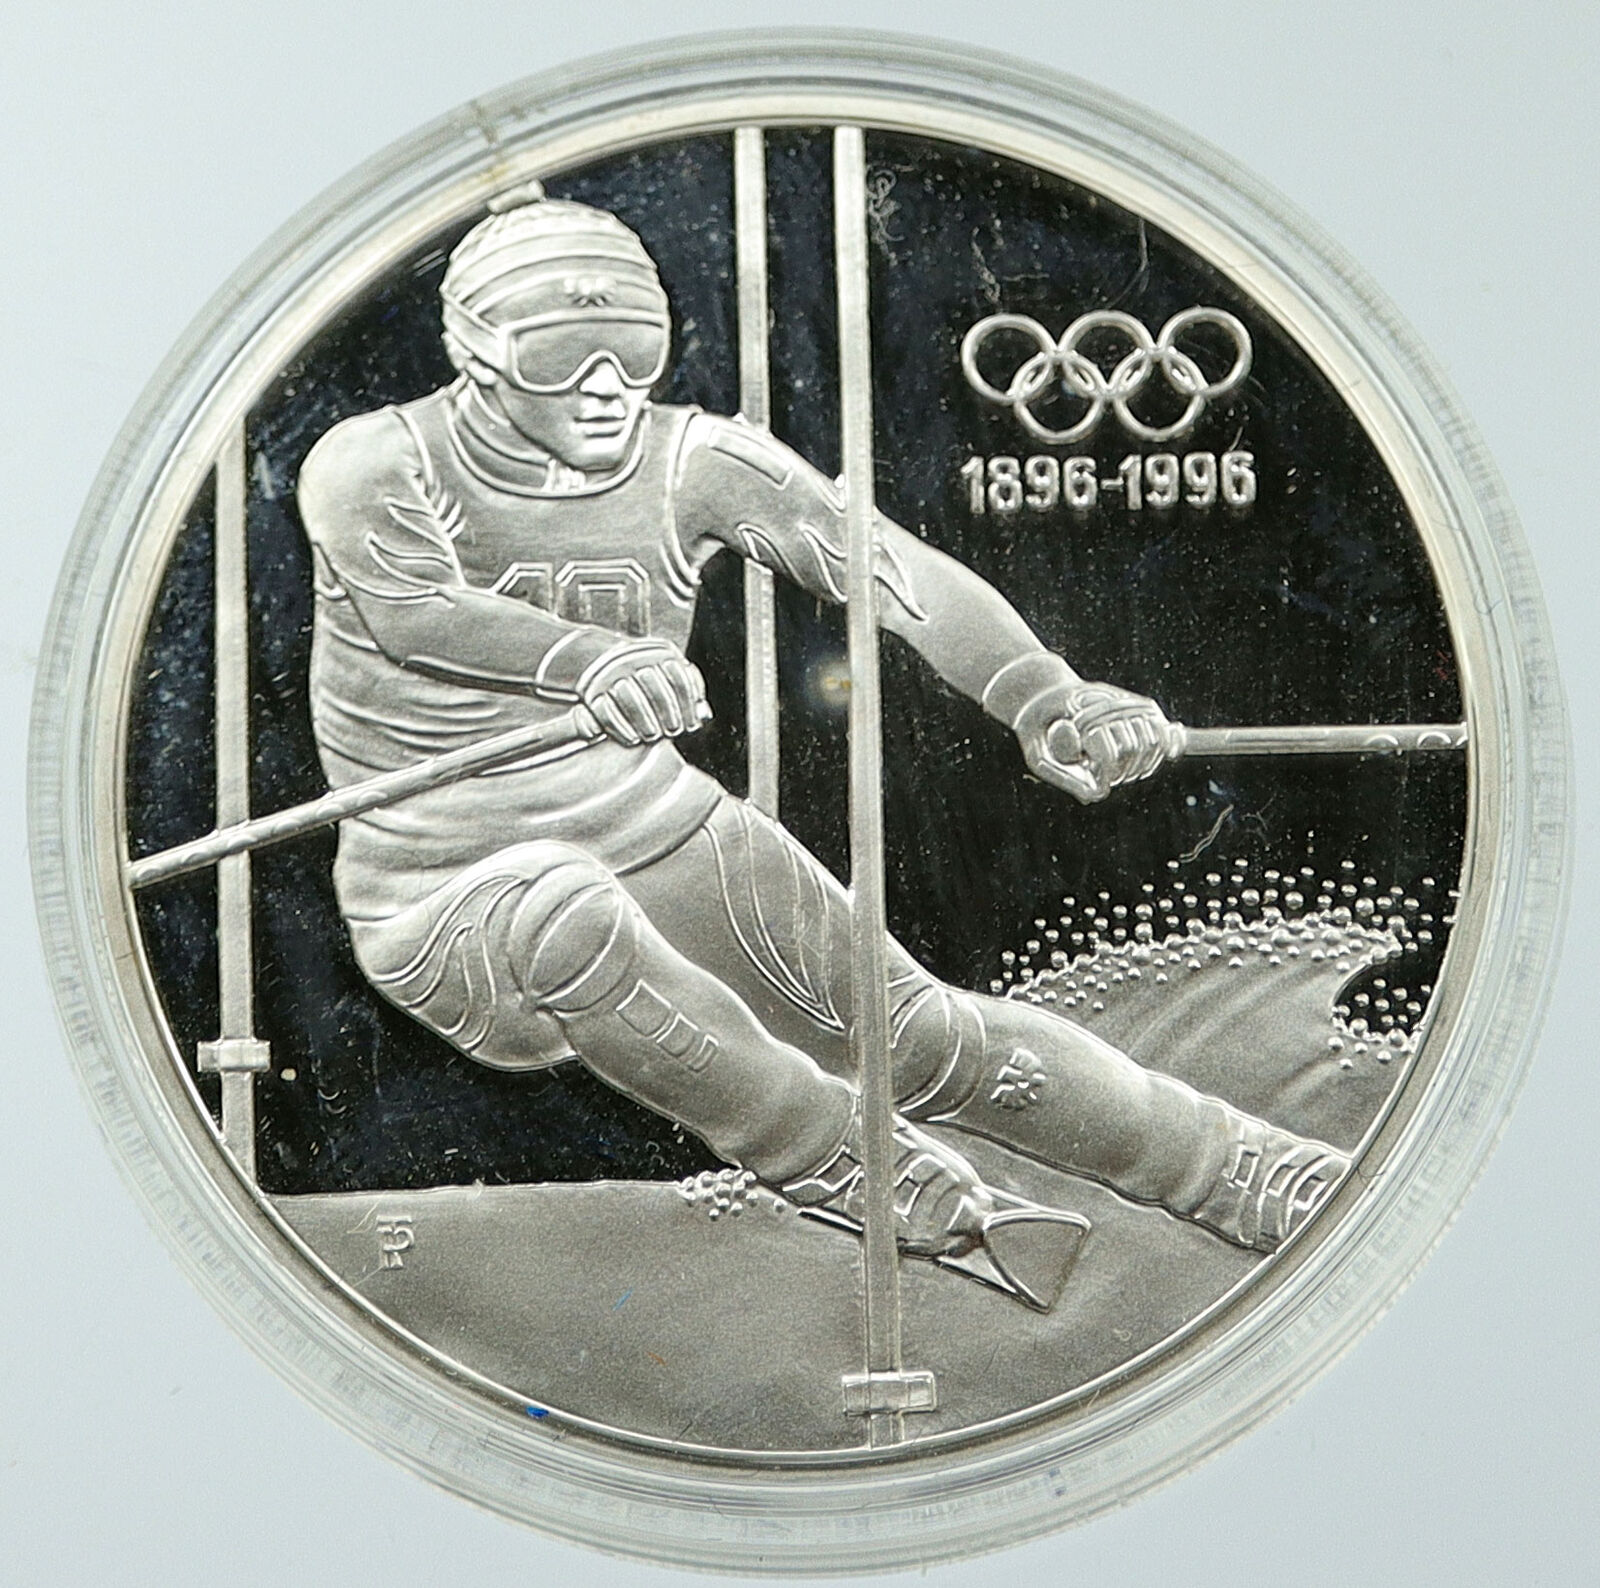 1995 AUSTRIA Centennial OLYMPICS SLALOM SKIING Proof Silver 200 Sch Coin i116495